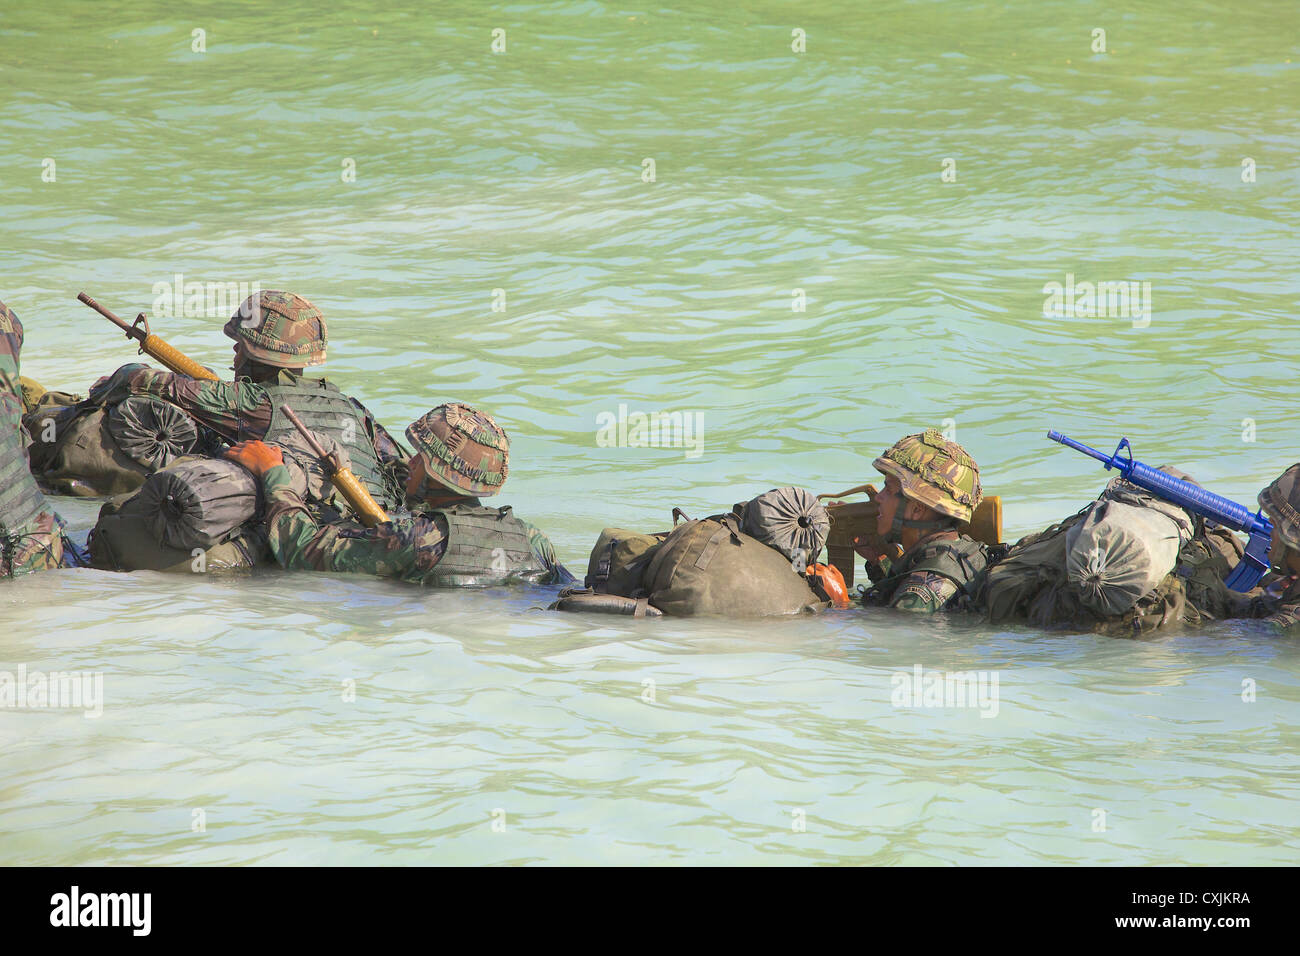 Military Exercise in Aruba Stock Photo